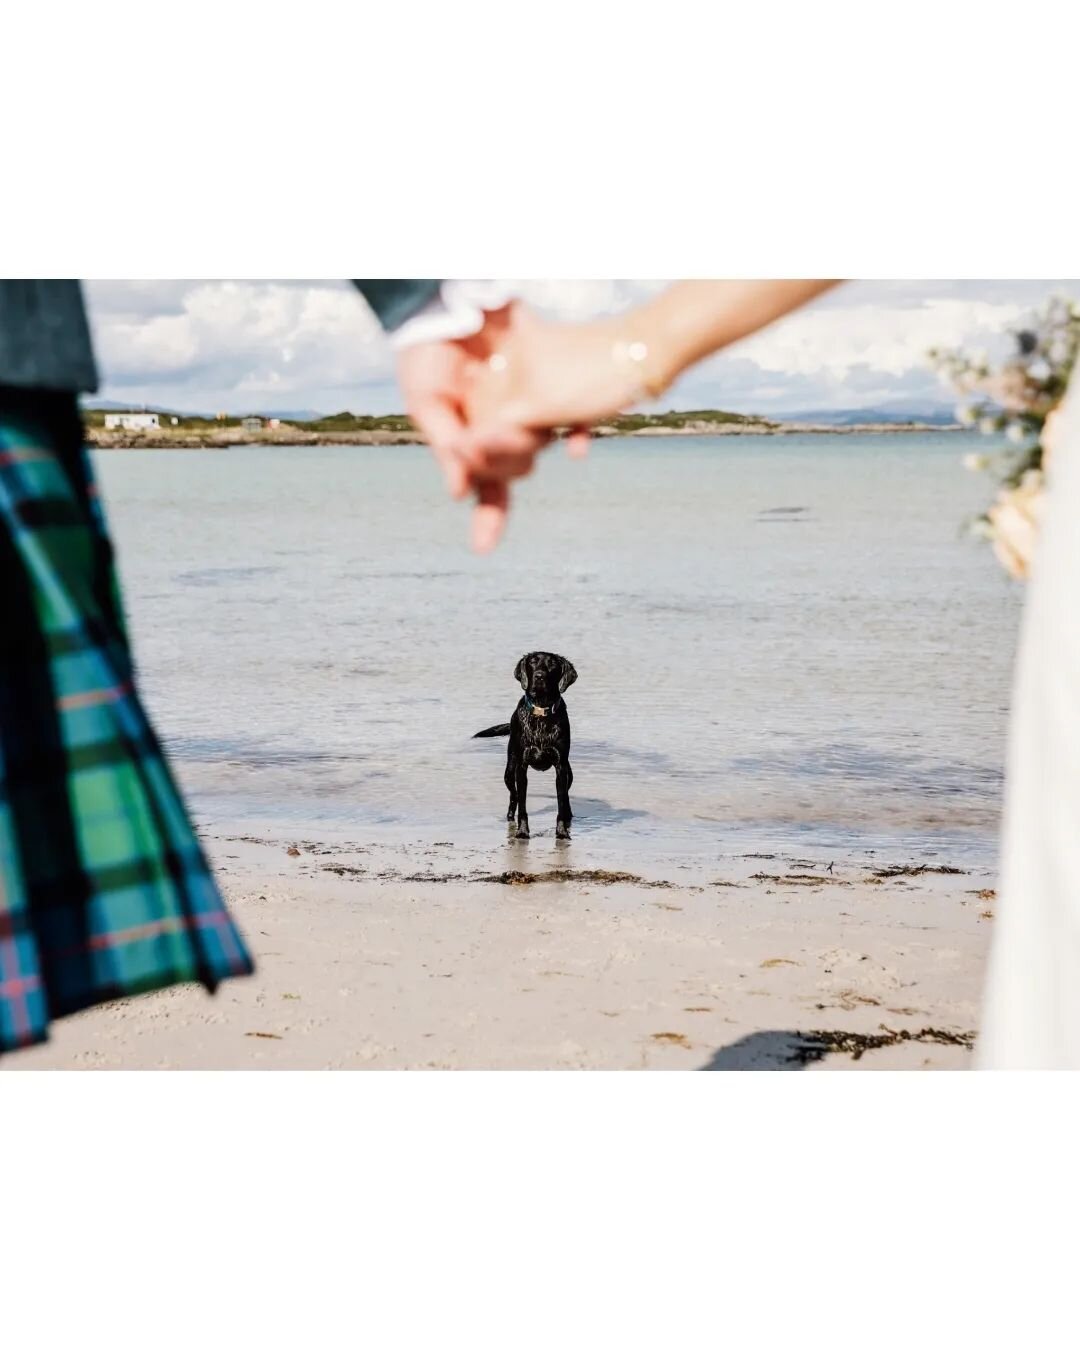 A post dedicated to Hannah + Zander's gorgeous labrador, Gigha. 🌊

If you're having your doggo at your wedding expect alot of photos of them!! 
.
.
.
.
.
.
. 
.
#dogsatweddings #dogatwedding #doglover #dogsofinstagram #dogphotography #dog #labrador 